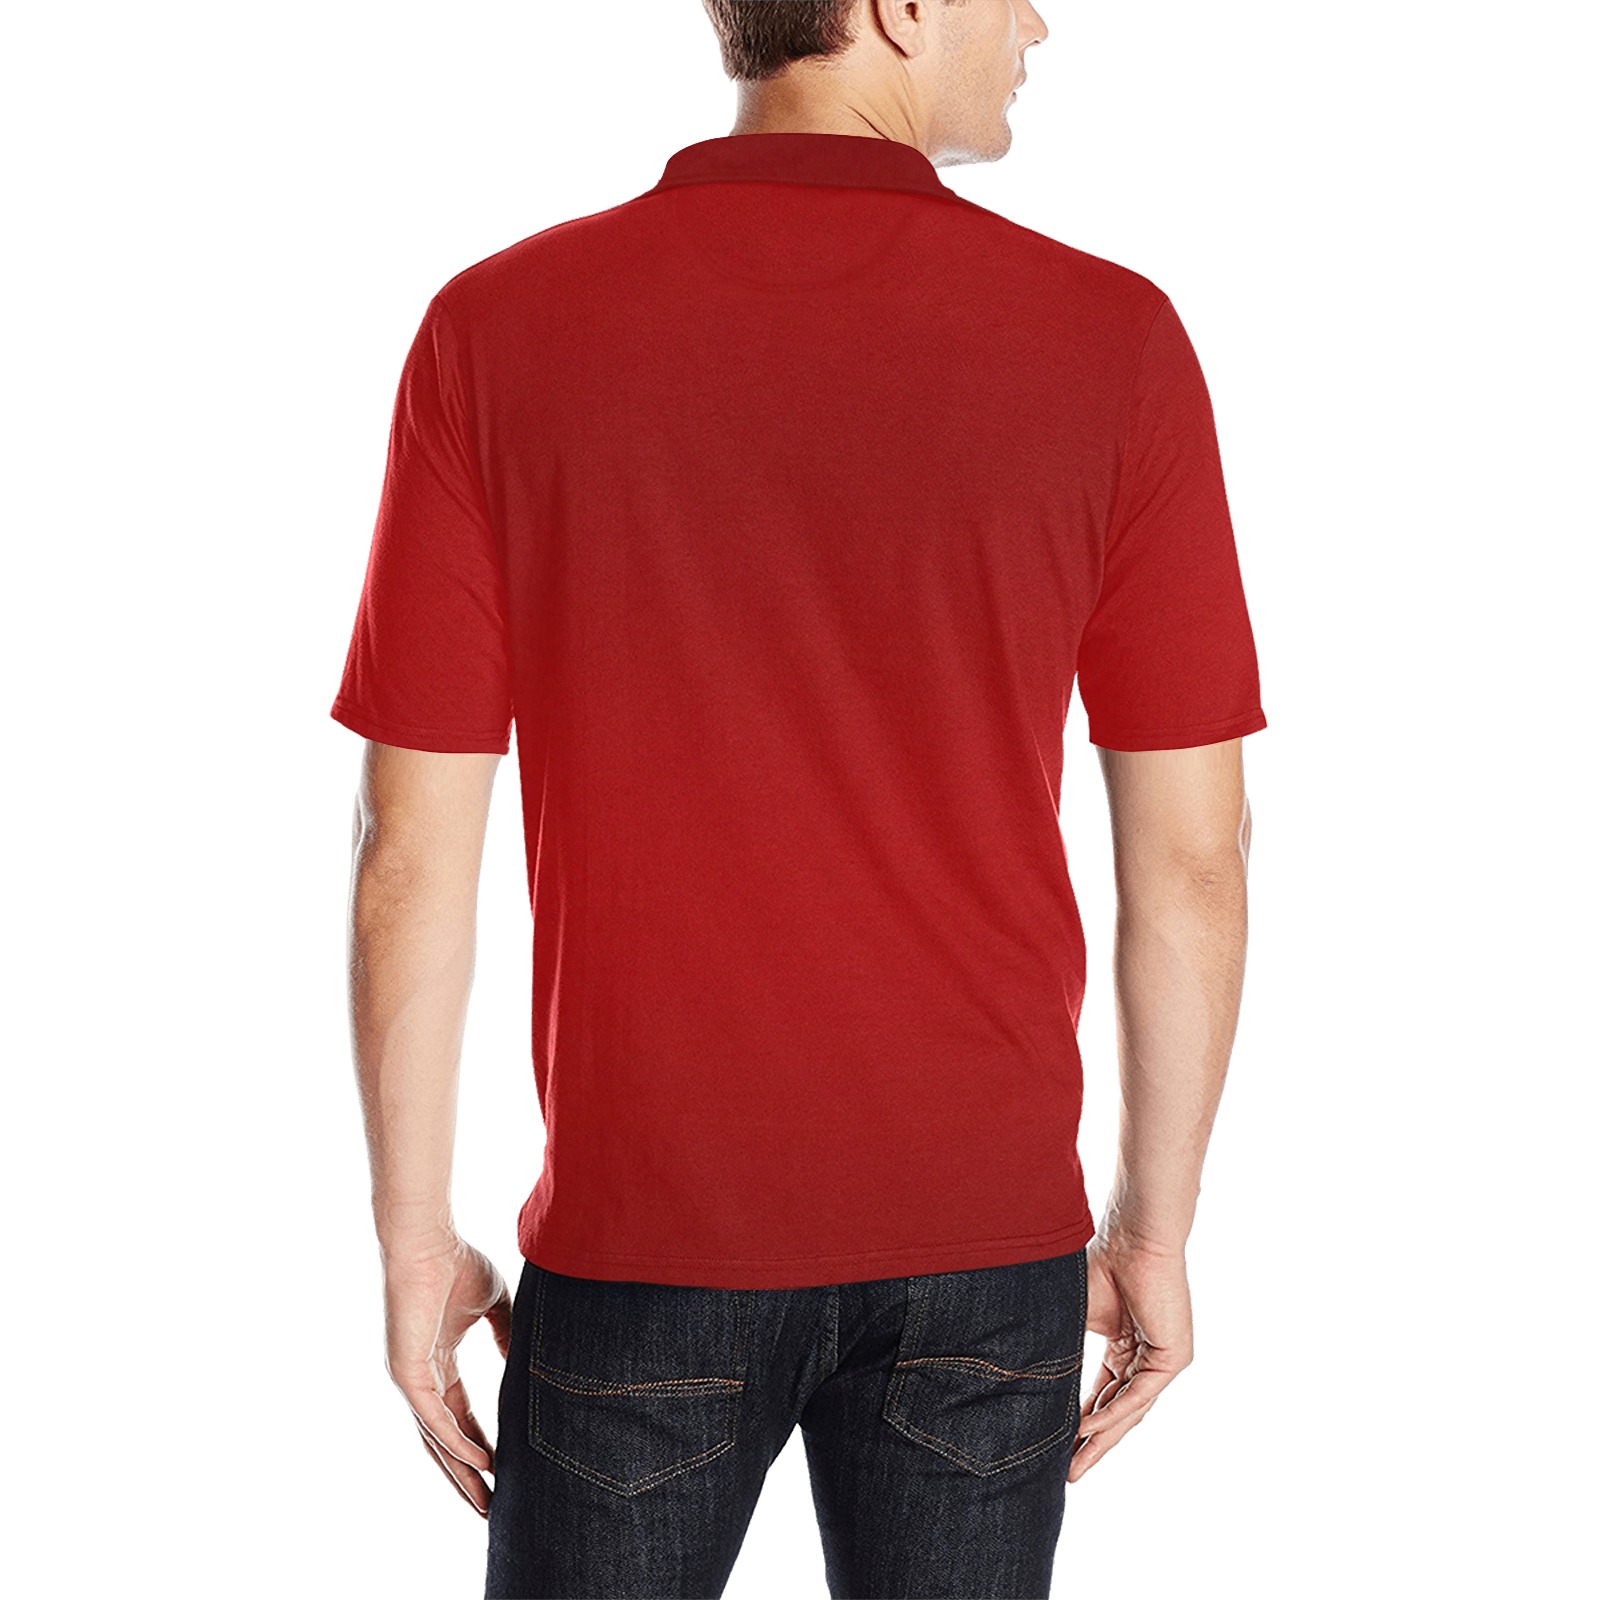 Canada Team Golf Shirts Men's All Over Print Polo Shirt (Model T55)